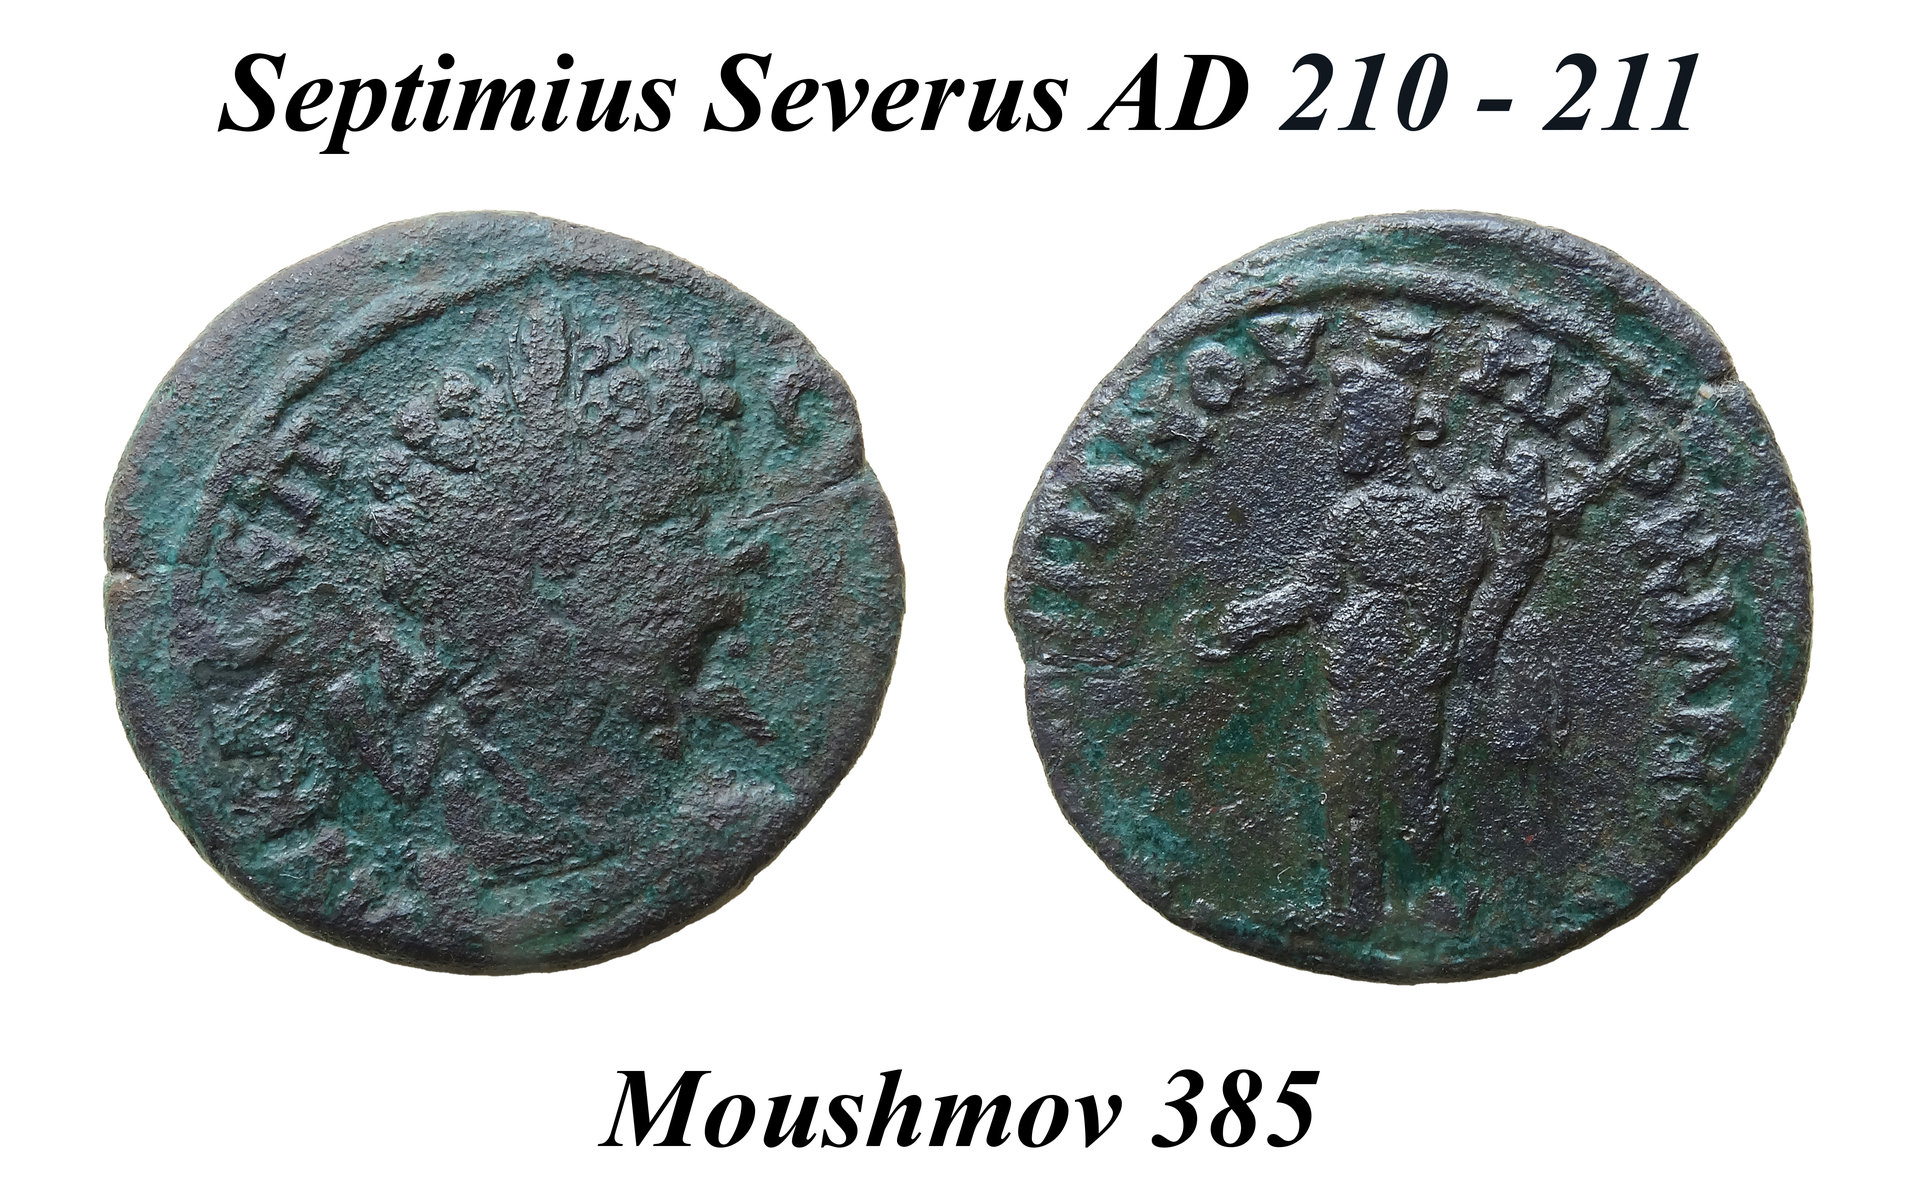 Septimius Severus Moushmov 385.jpg